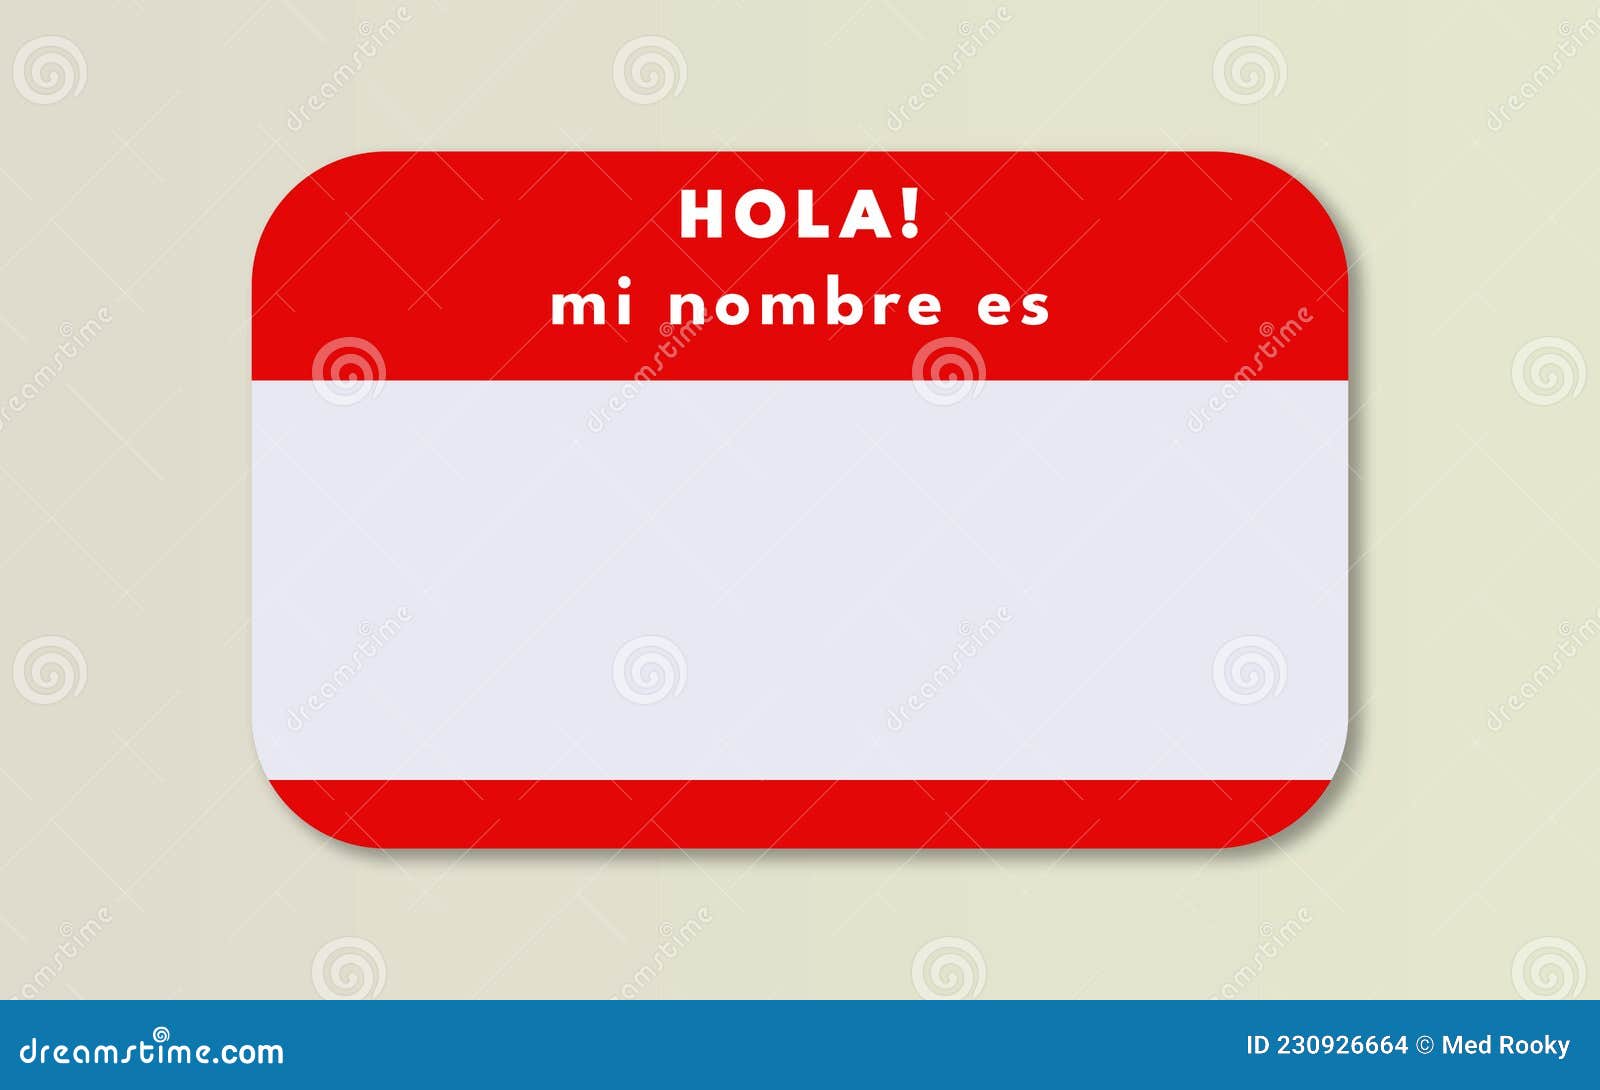 hola mi nombre es: nombre de etiqueta in color rojo. name tag red card in spanish text. branding and company identity